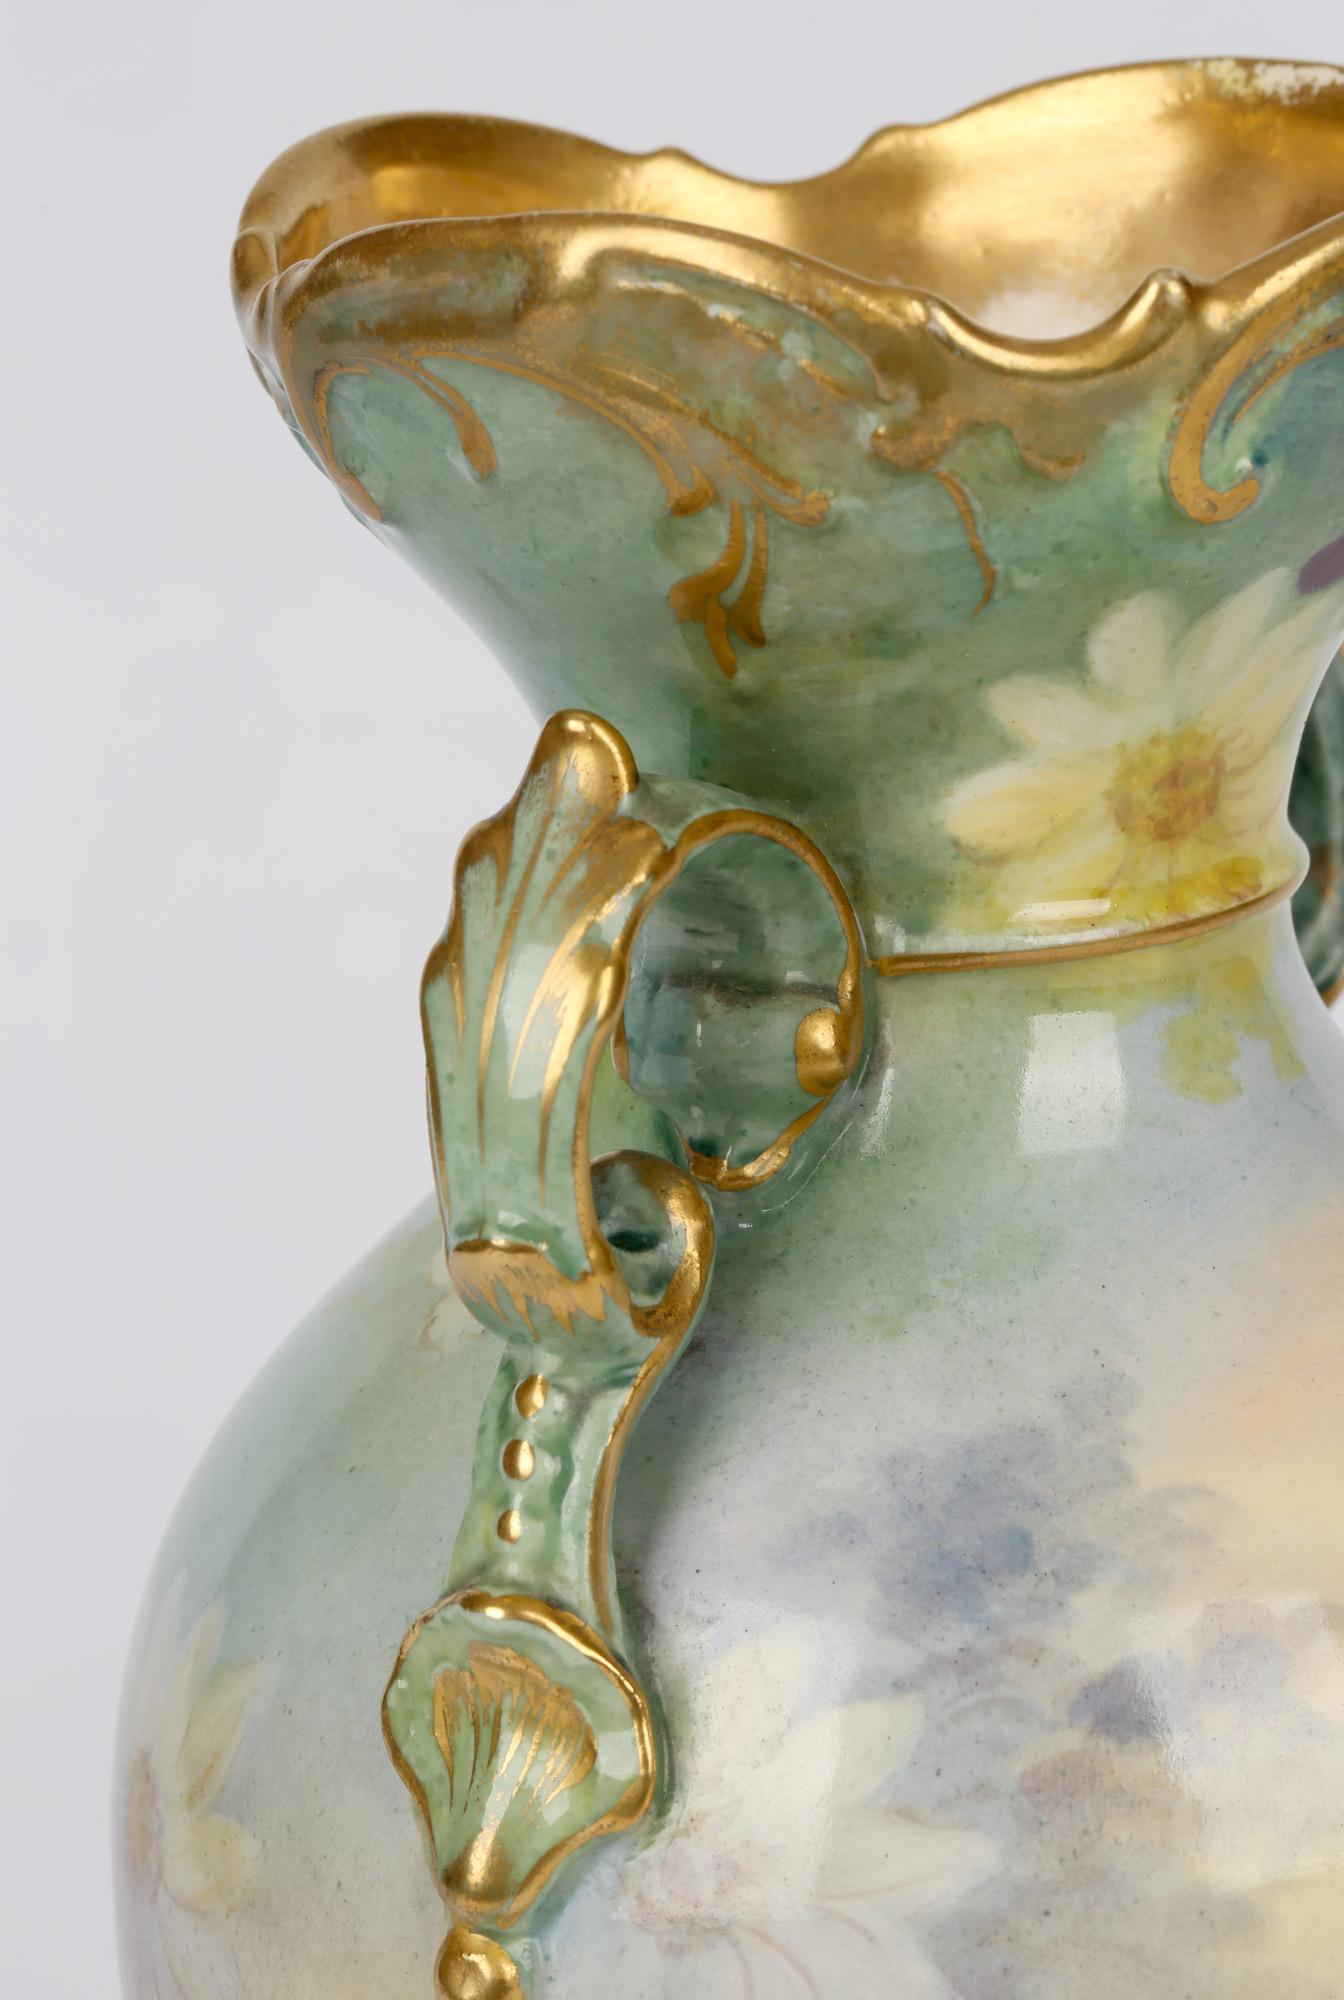 royal bonn germany vase 1755 value